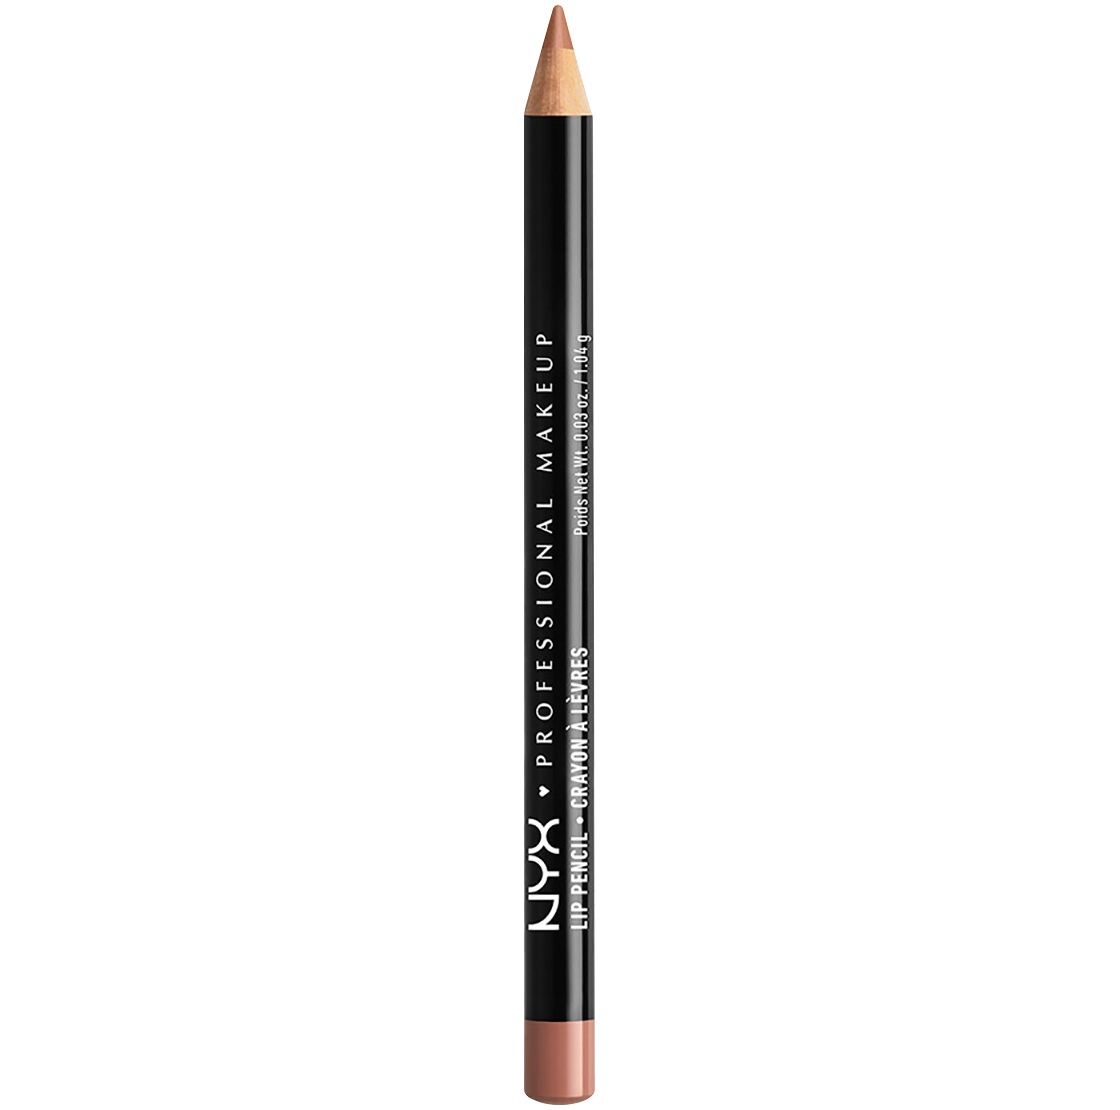 Натуральный карандаш для губ Nyx Professional Makeup Slide On, 1 гр nyx lip pencil slim 20 espresso 0 03 oz 1 04 g